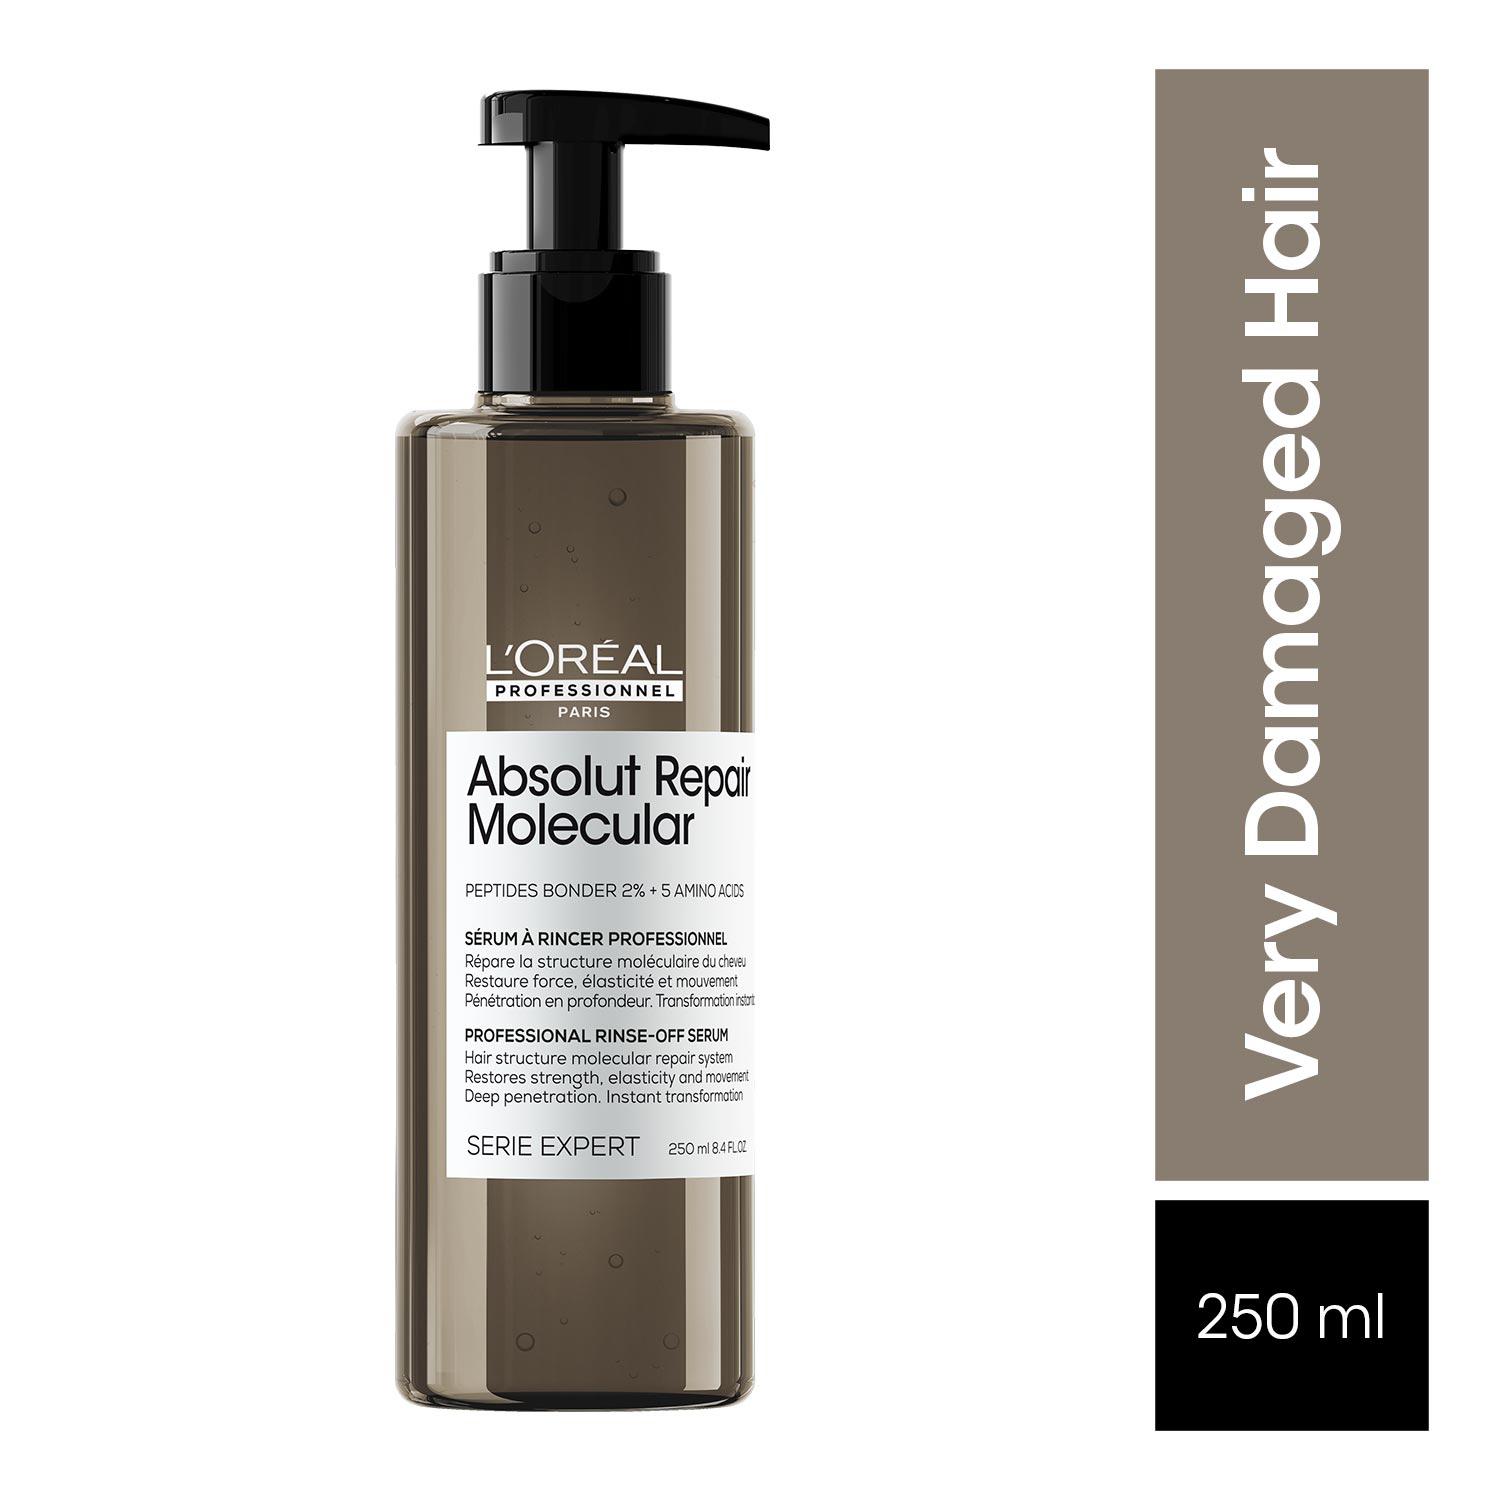 L'Oreal Professionnel | L'Oreal Professionnel Absolut Repair Molecular Deep Repairing Hair Rinse-off Serum for Damaged Hair (250 ml)